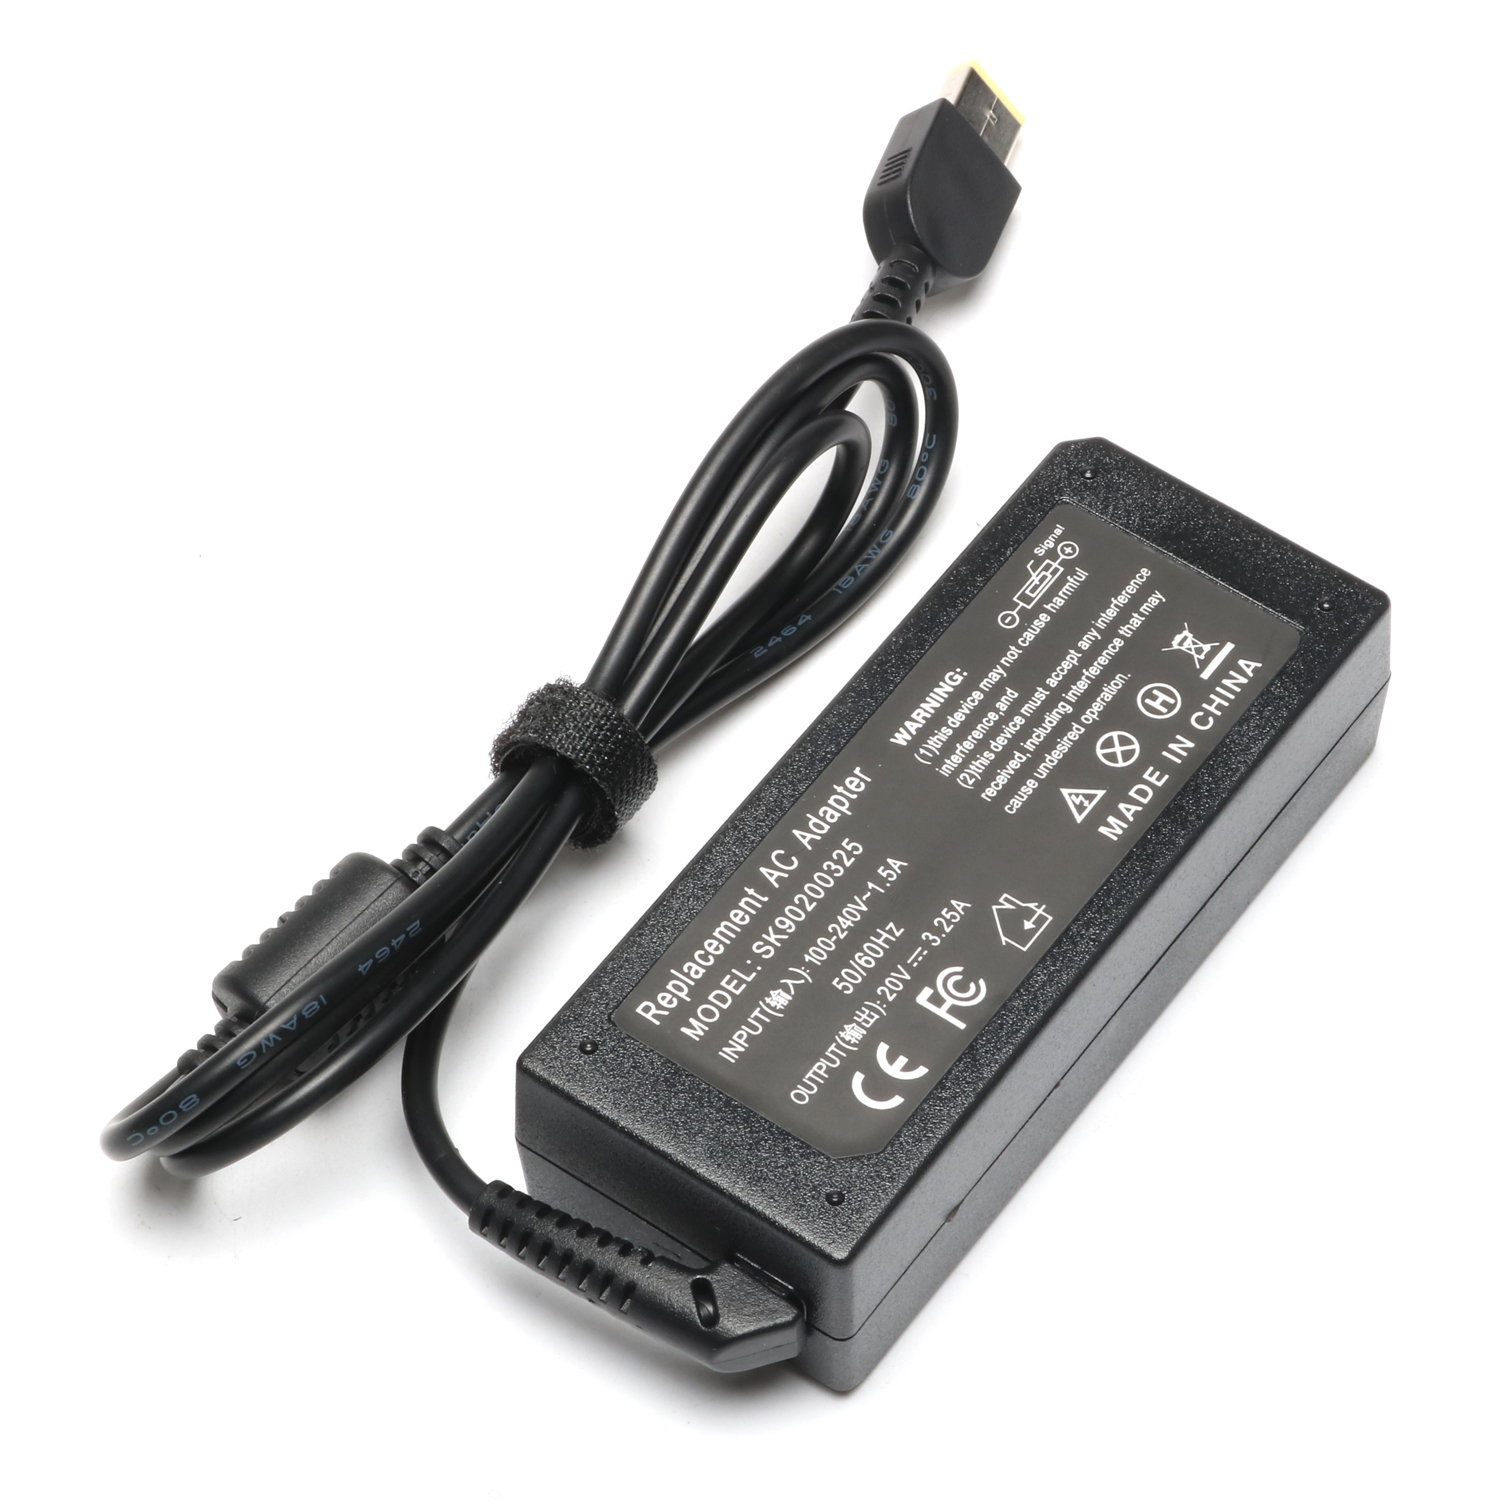 20V 3.25A 65W USB AC Adapter Charger For Lenovo Yoga 2 11 11s 13 2 Pro, Flex 2 15 15D 14 10,IdeaPad S210 U430 U530,Compatible Flex G40 G50 13 13-2191 - image 5 of 8